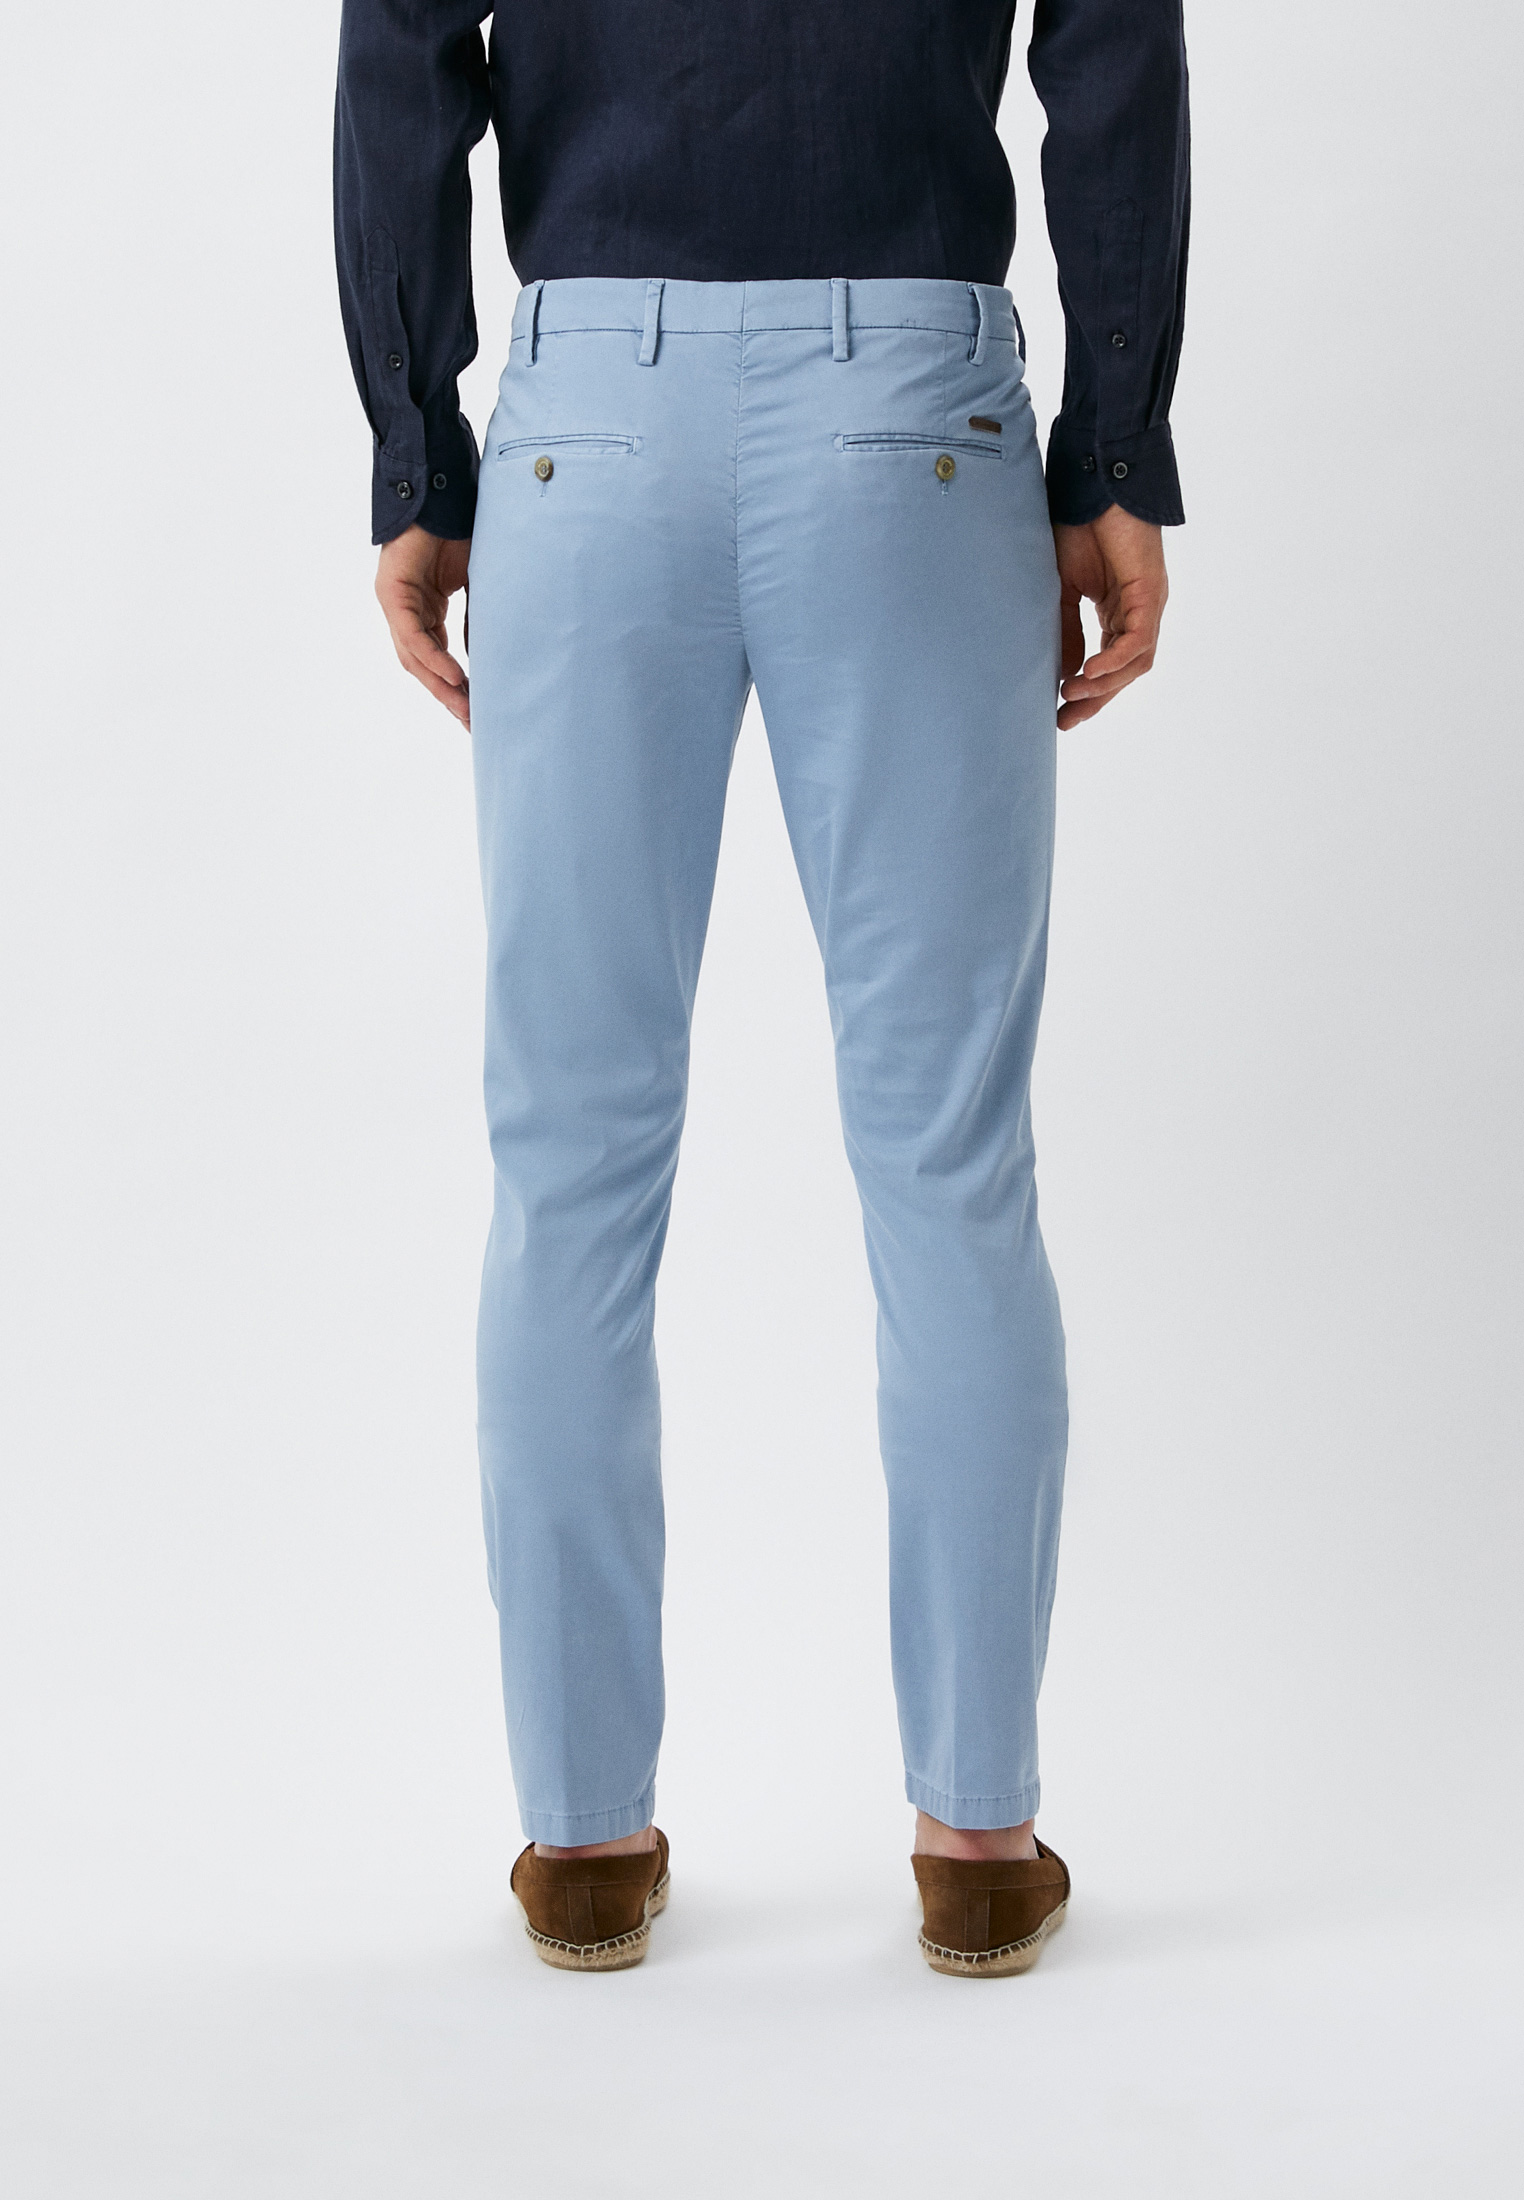 Мужские брюки BALDESSARINI (Балдессарини) B1 19001.6659: изображение 3